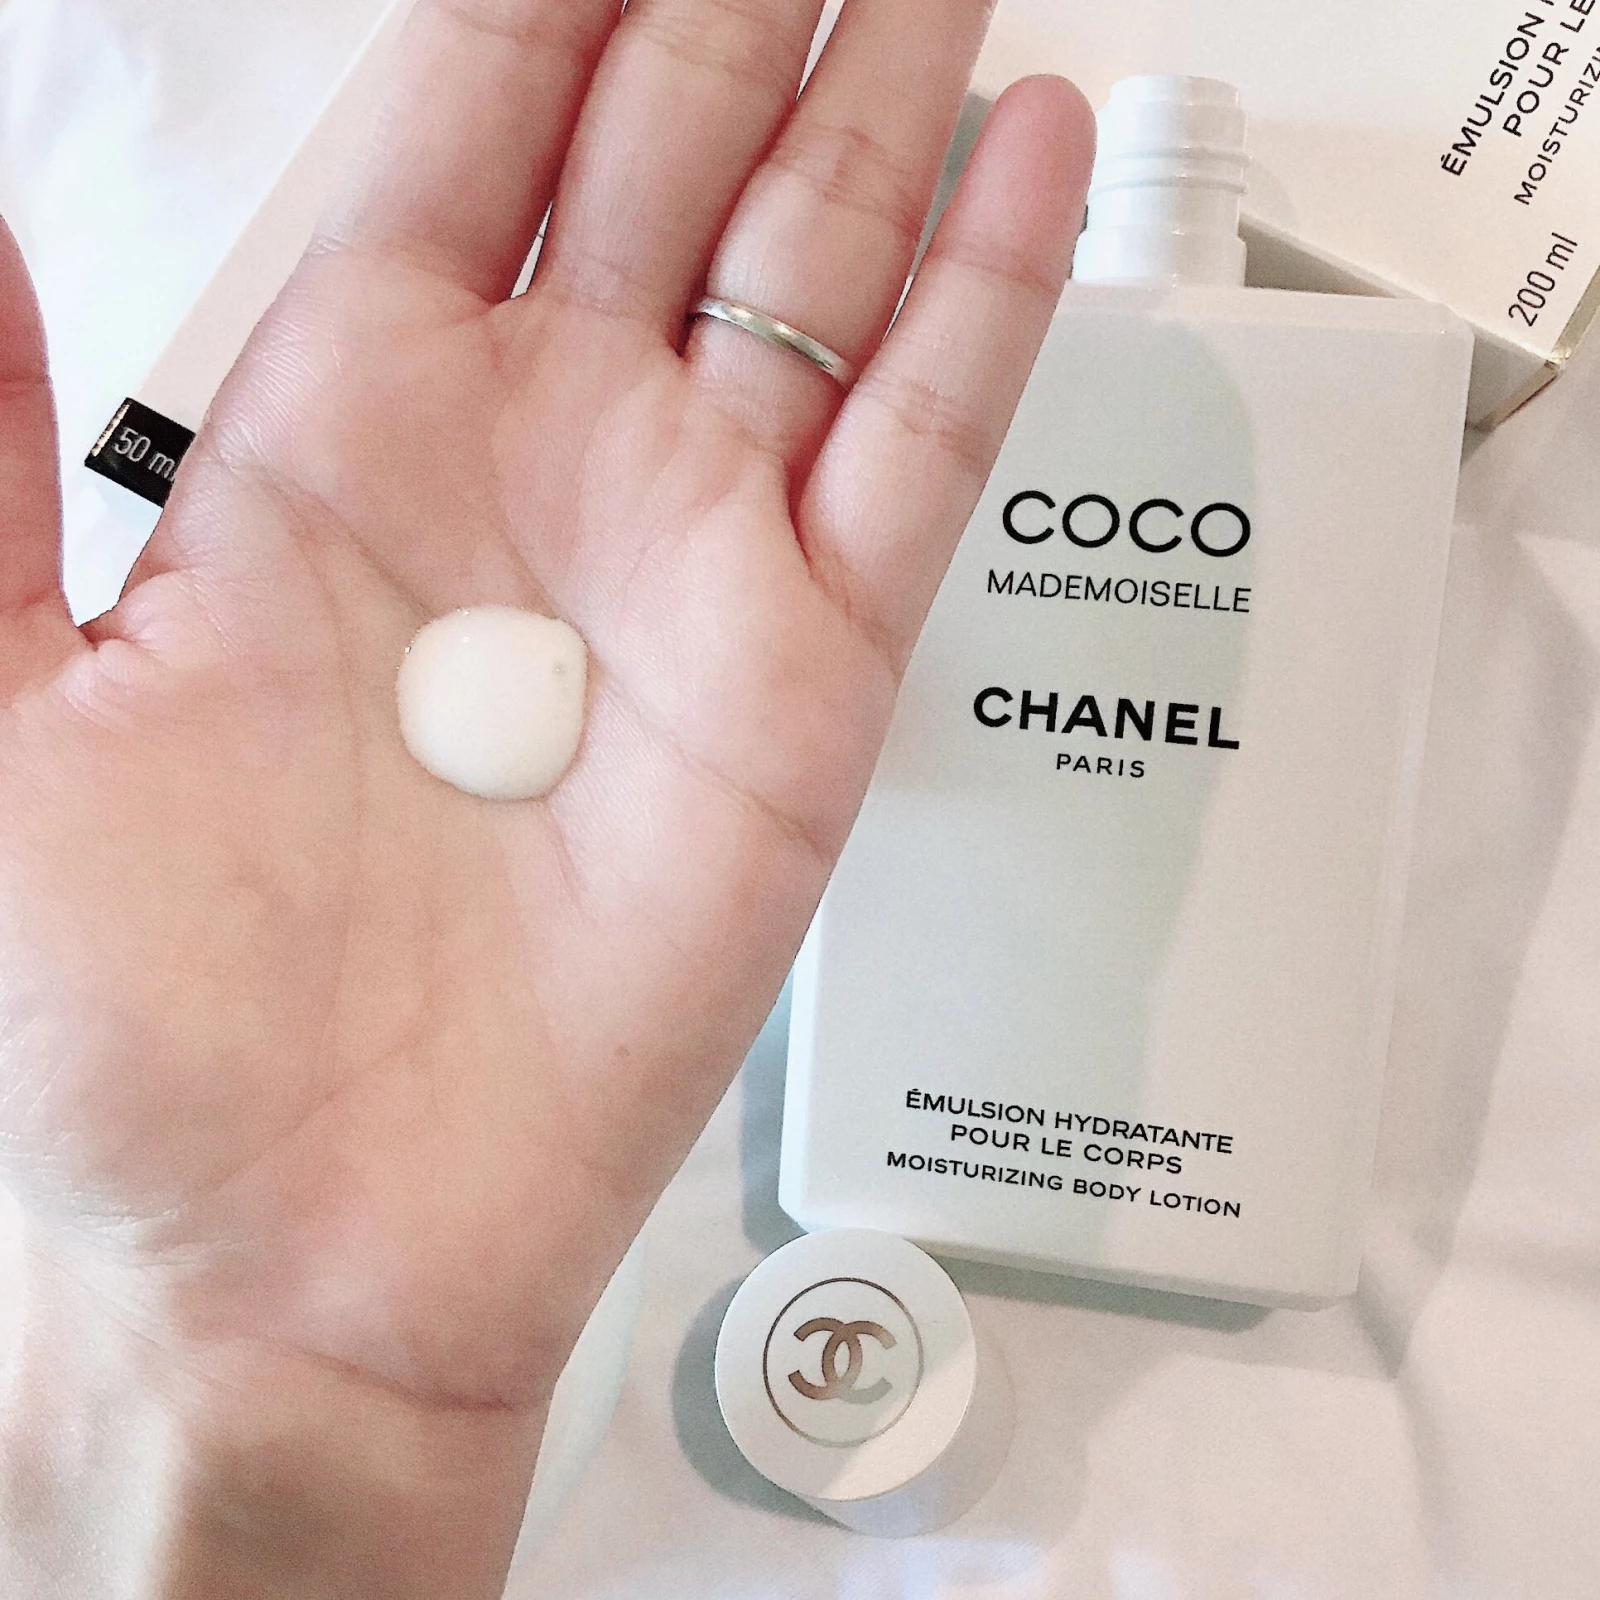 Chia sẻ 57 về chanel body cream coco mademoiselle mới nhất   cdgdbentreeduvn